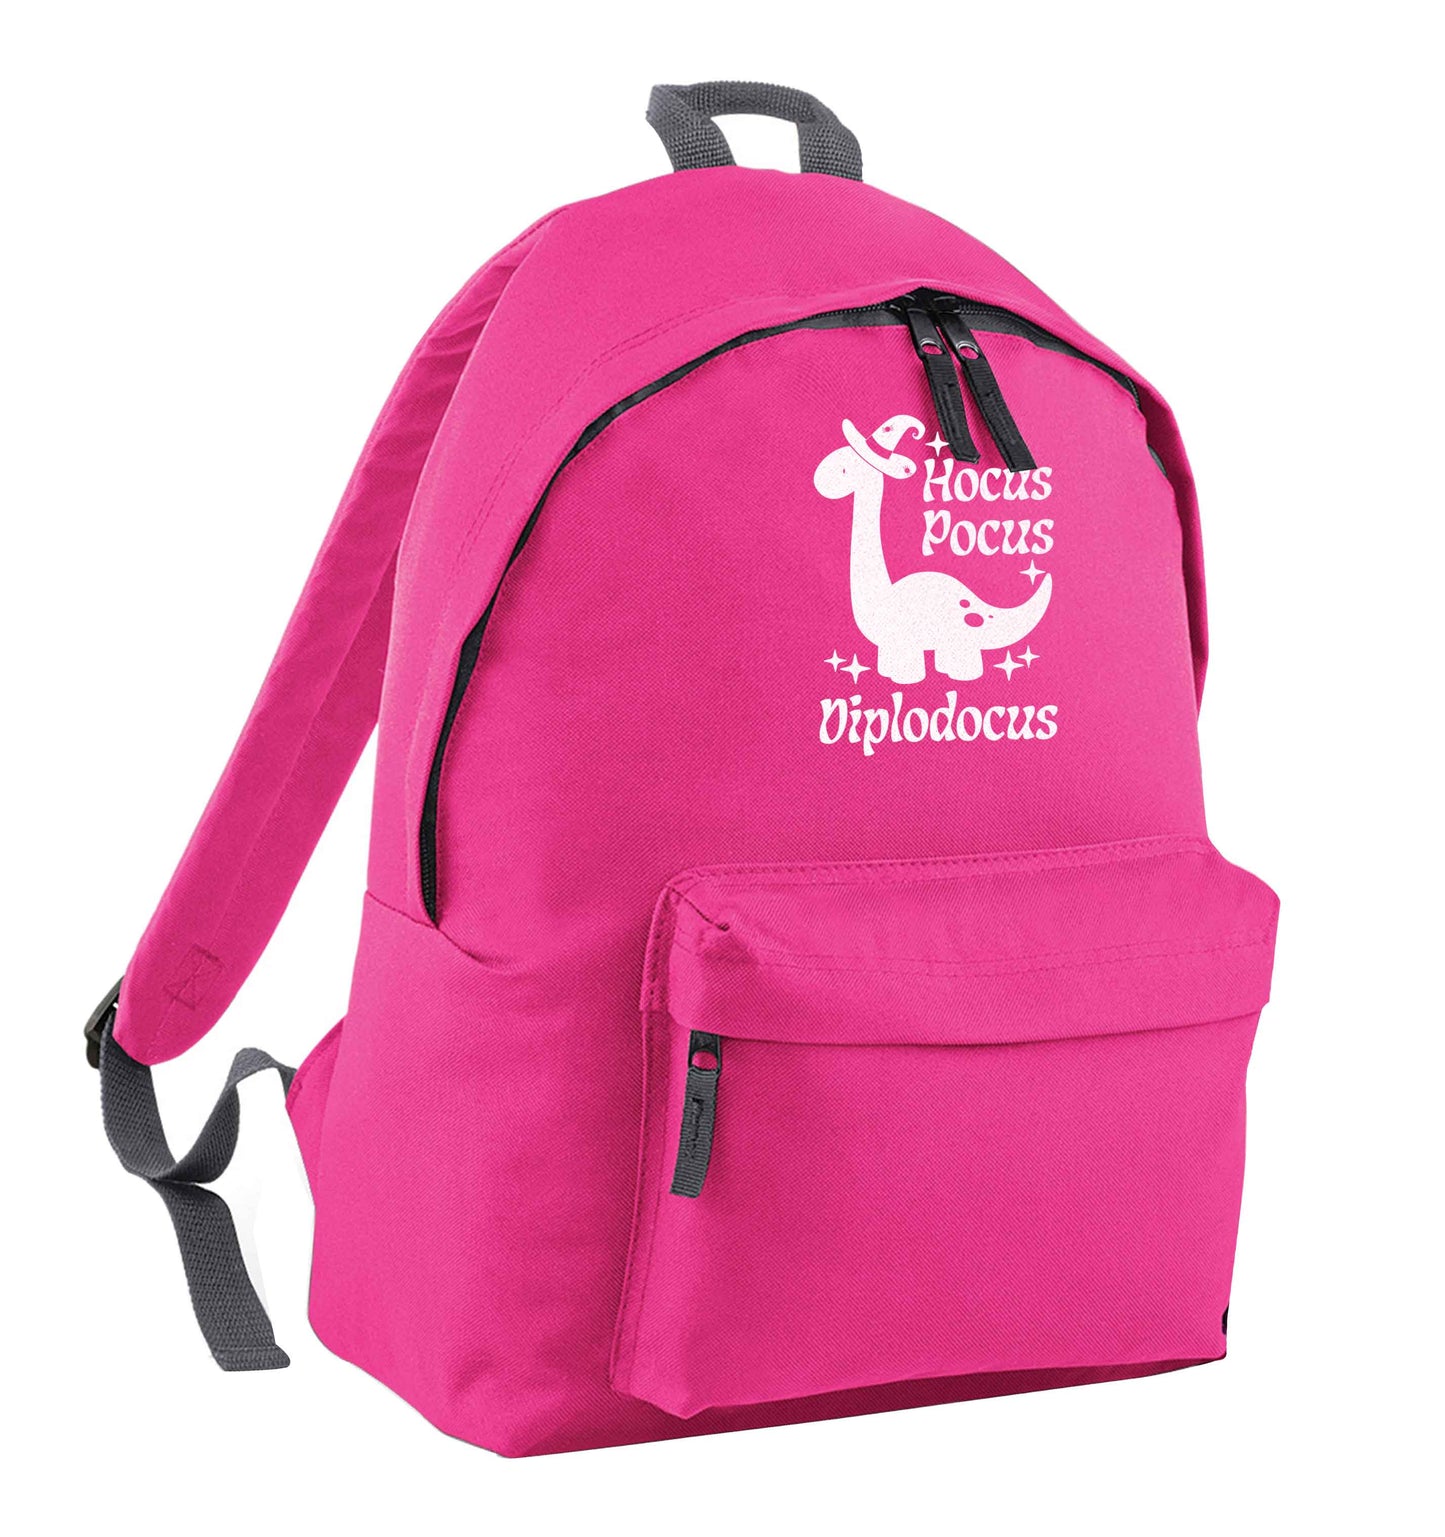 Hocus pocus diplodocus Kit pink children's backpack